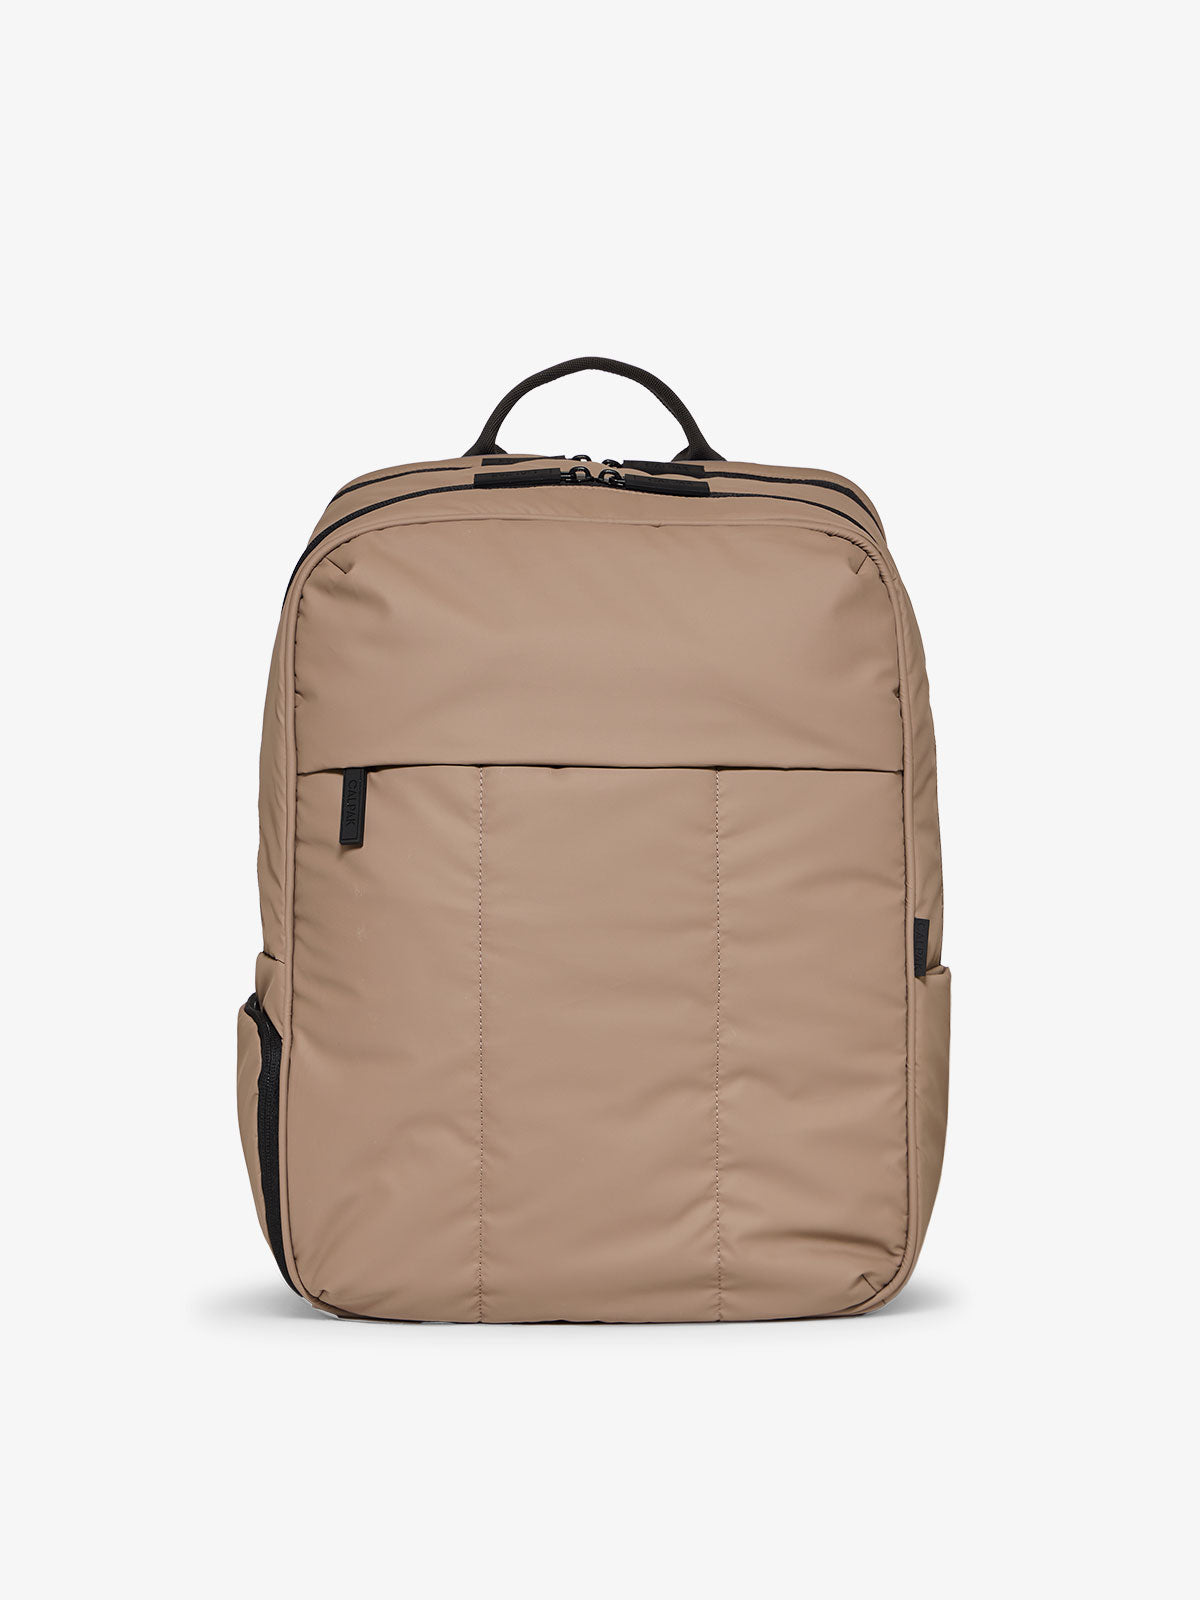 Luka 17 inch Laptop Backpack | CALPAK